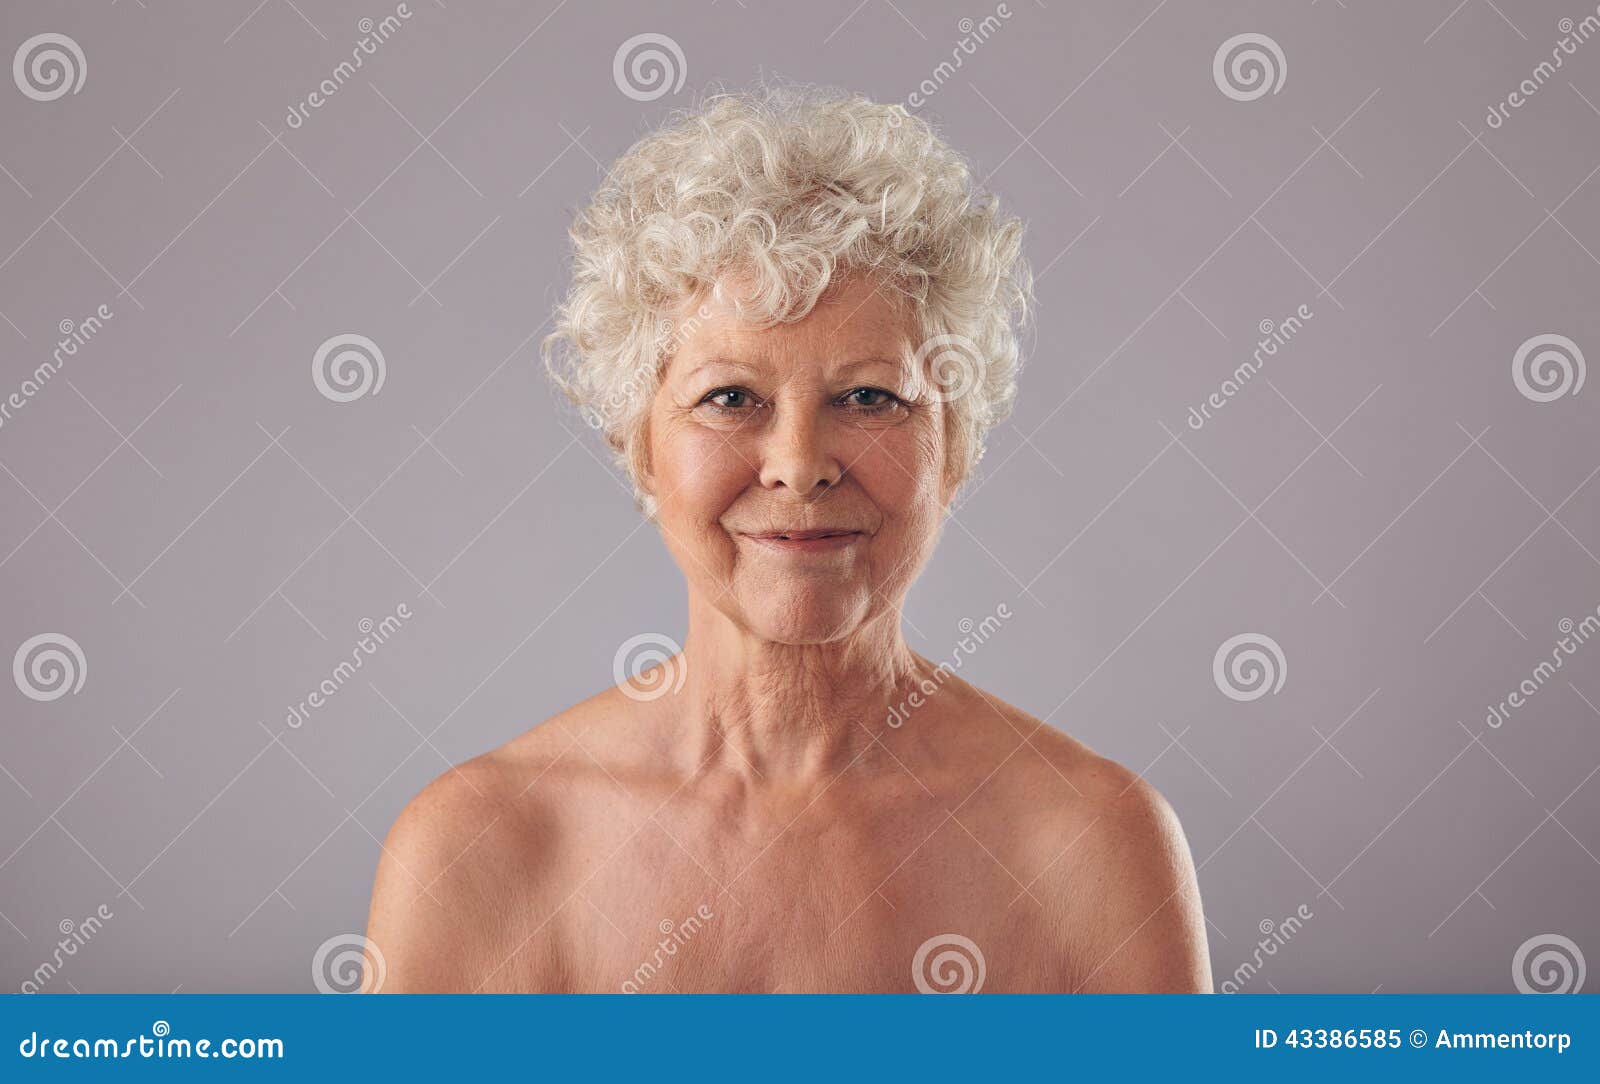 chris tornblom add photo beautiful naked senior women